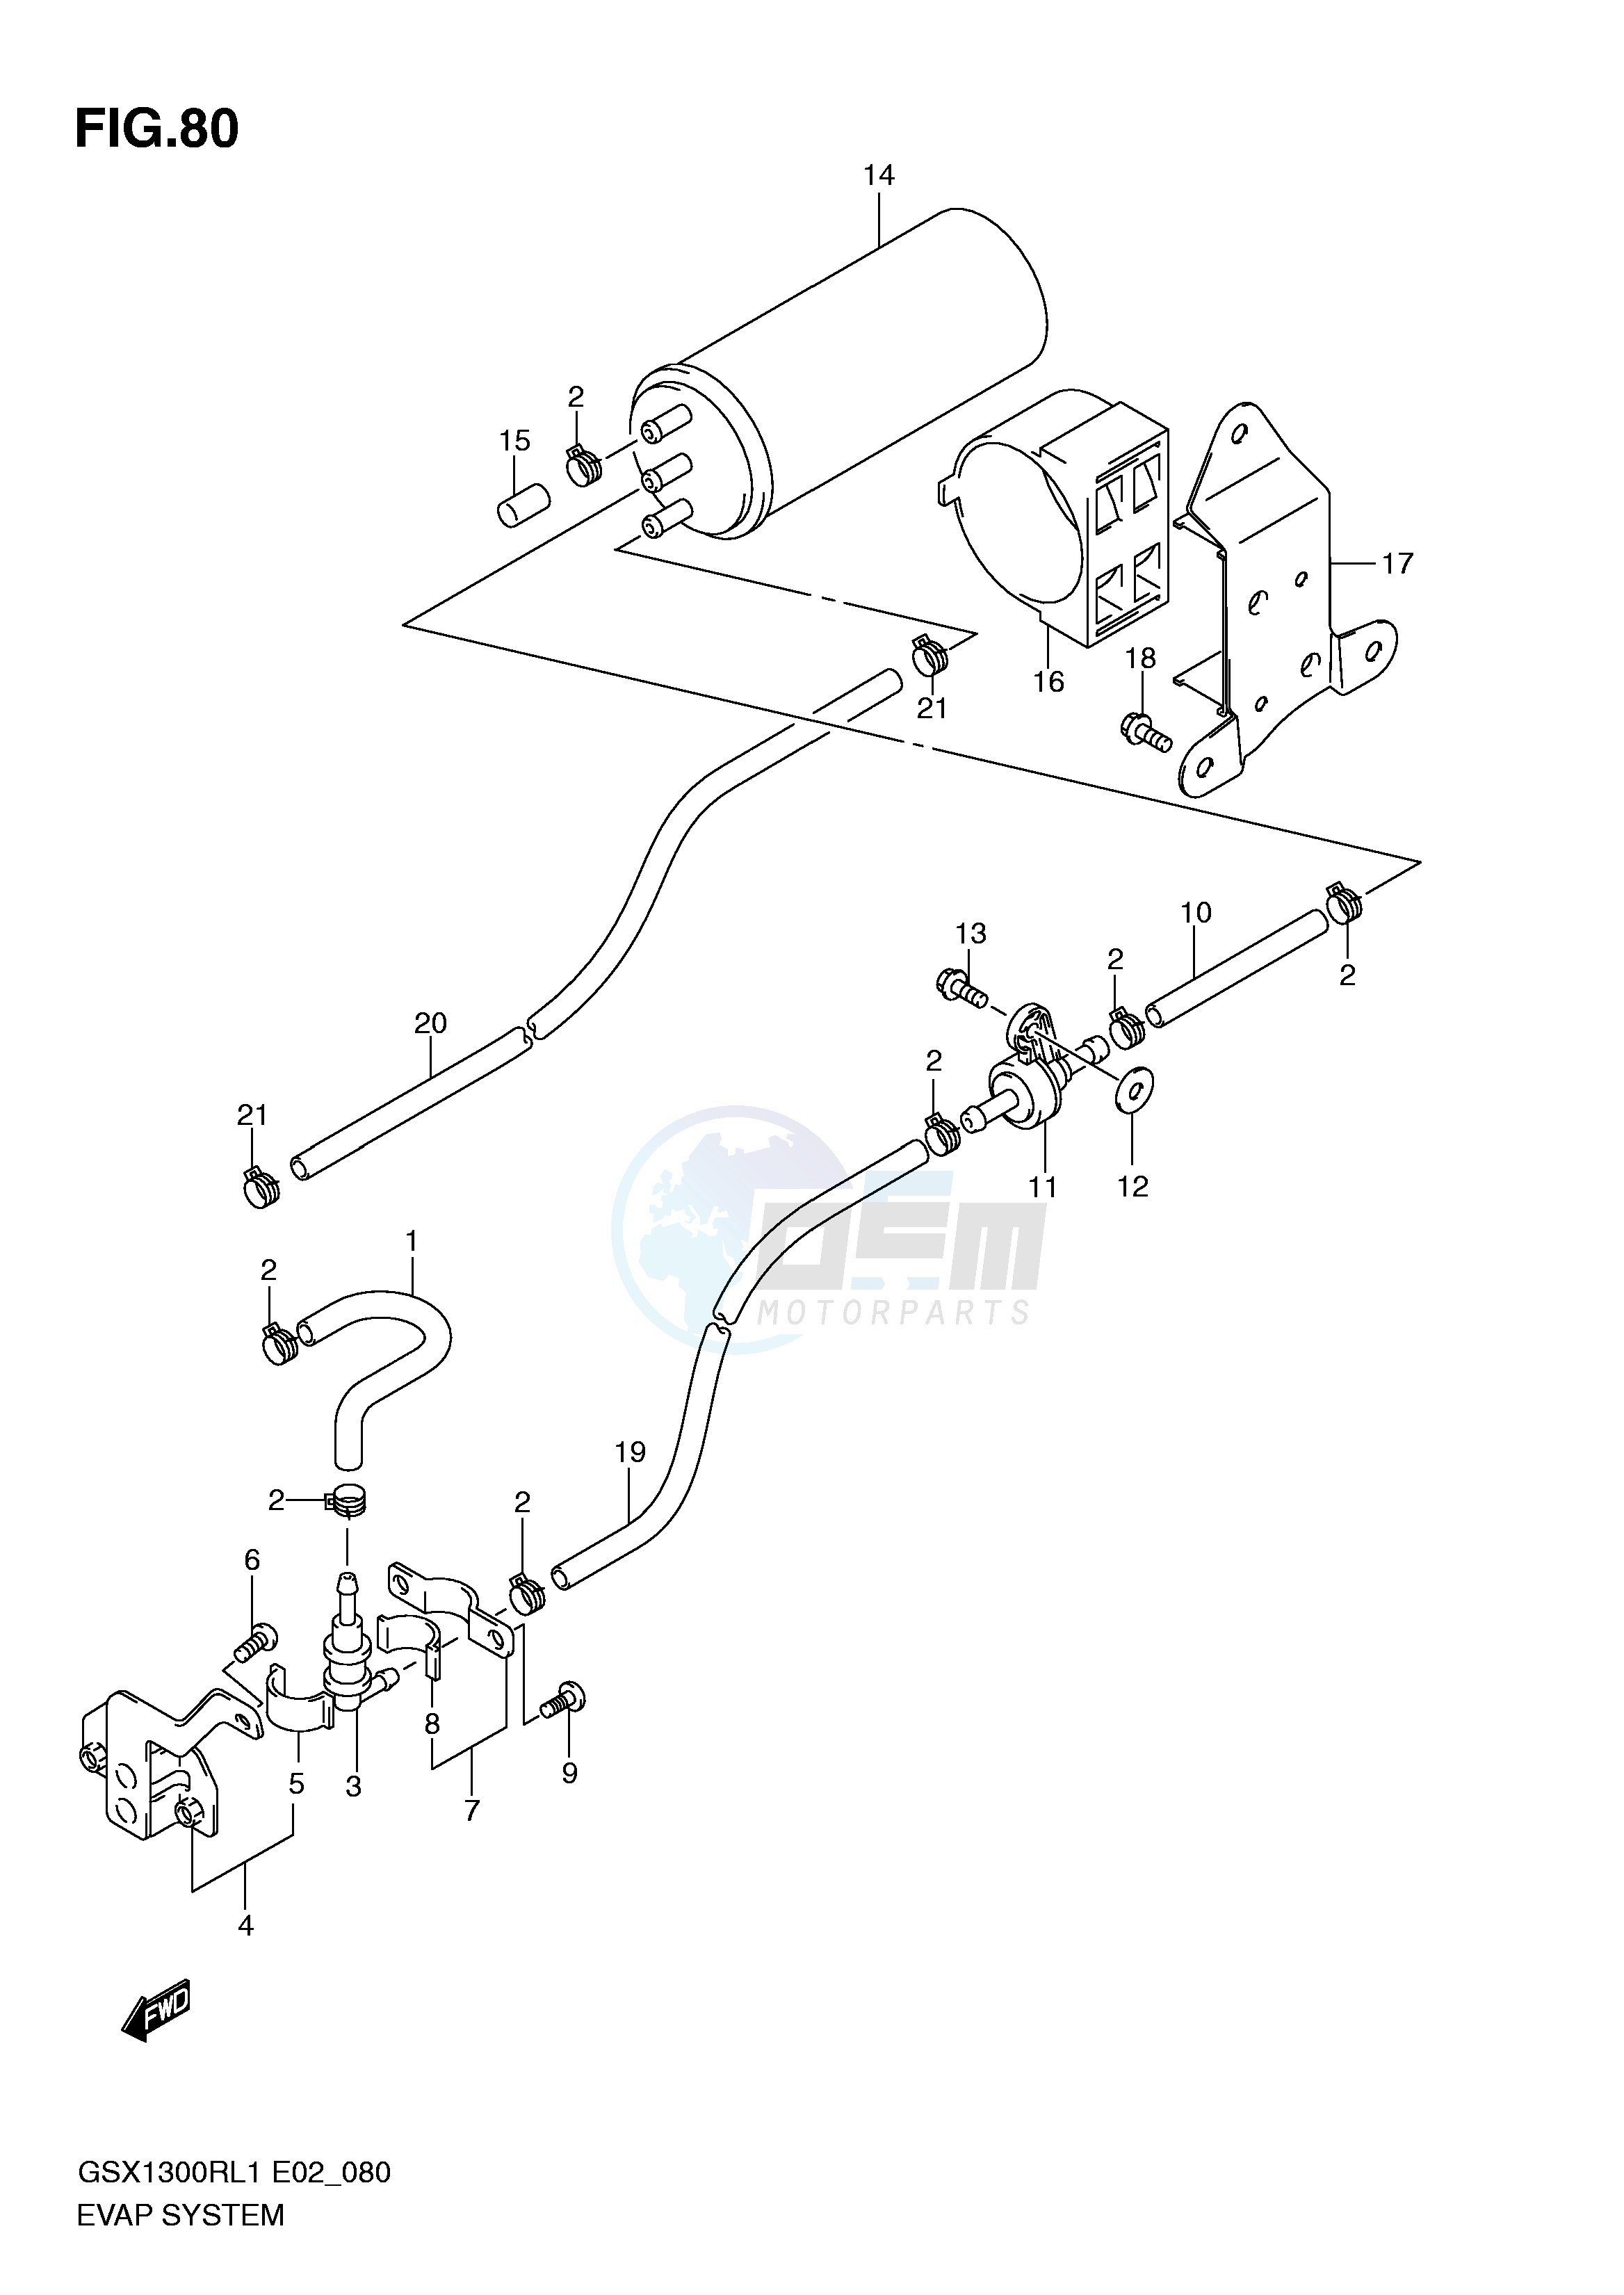 EVAP SYSTEM (GSX1300RL1 E14) blueprint